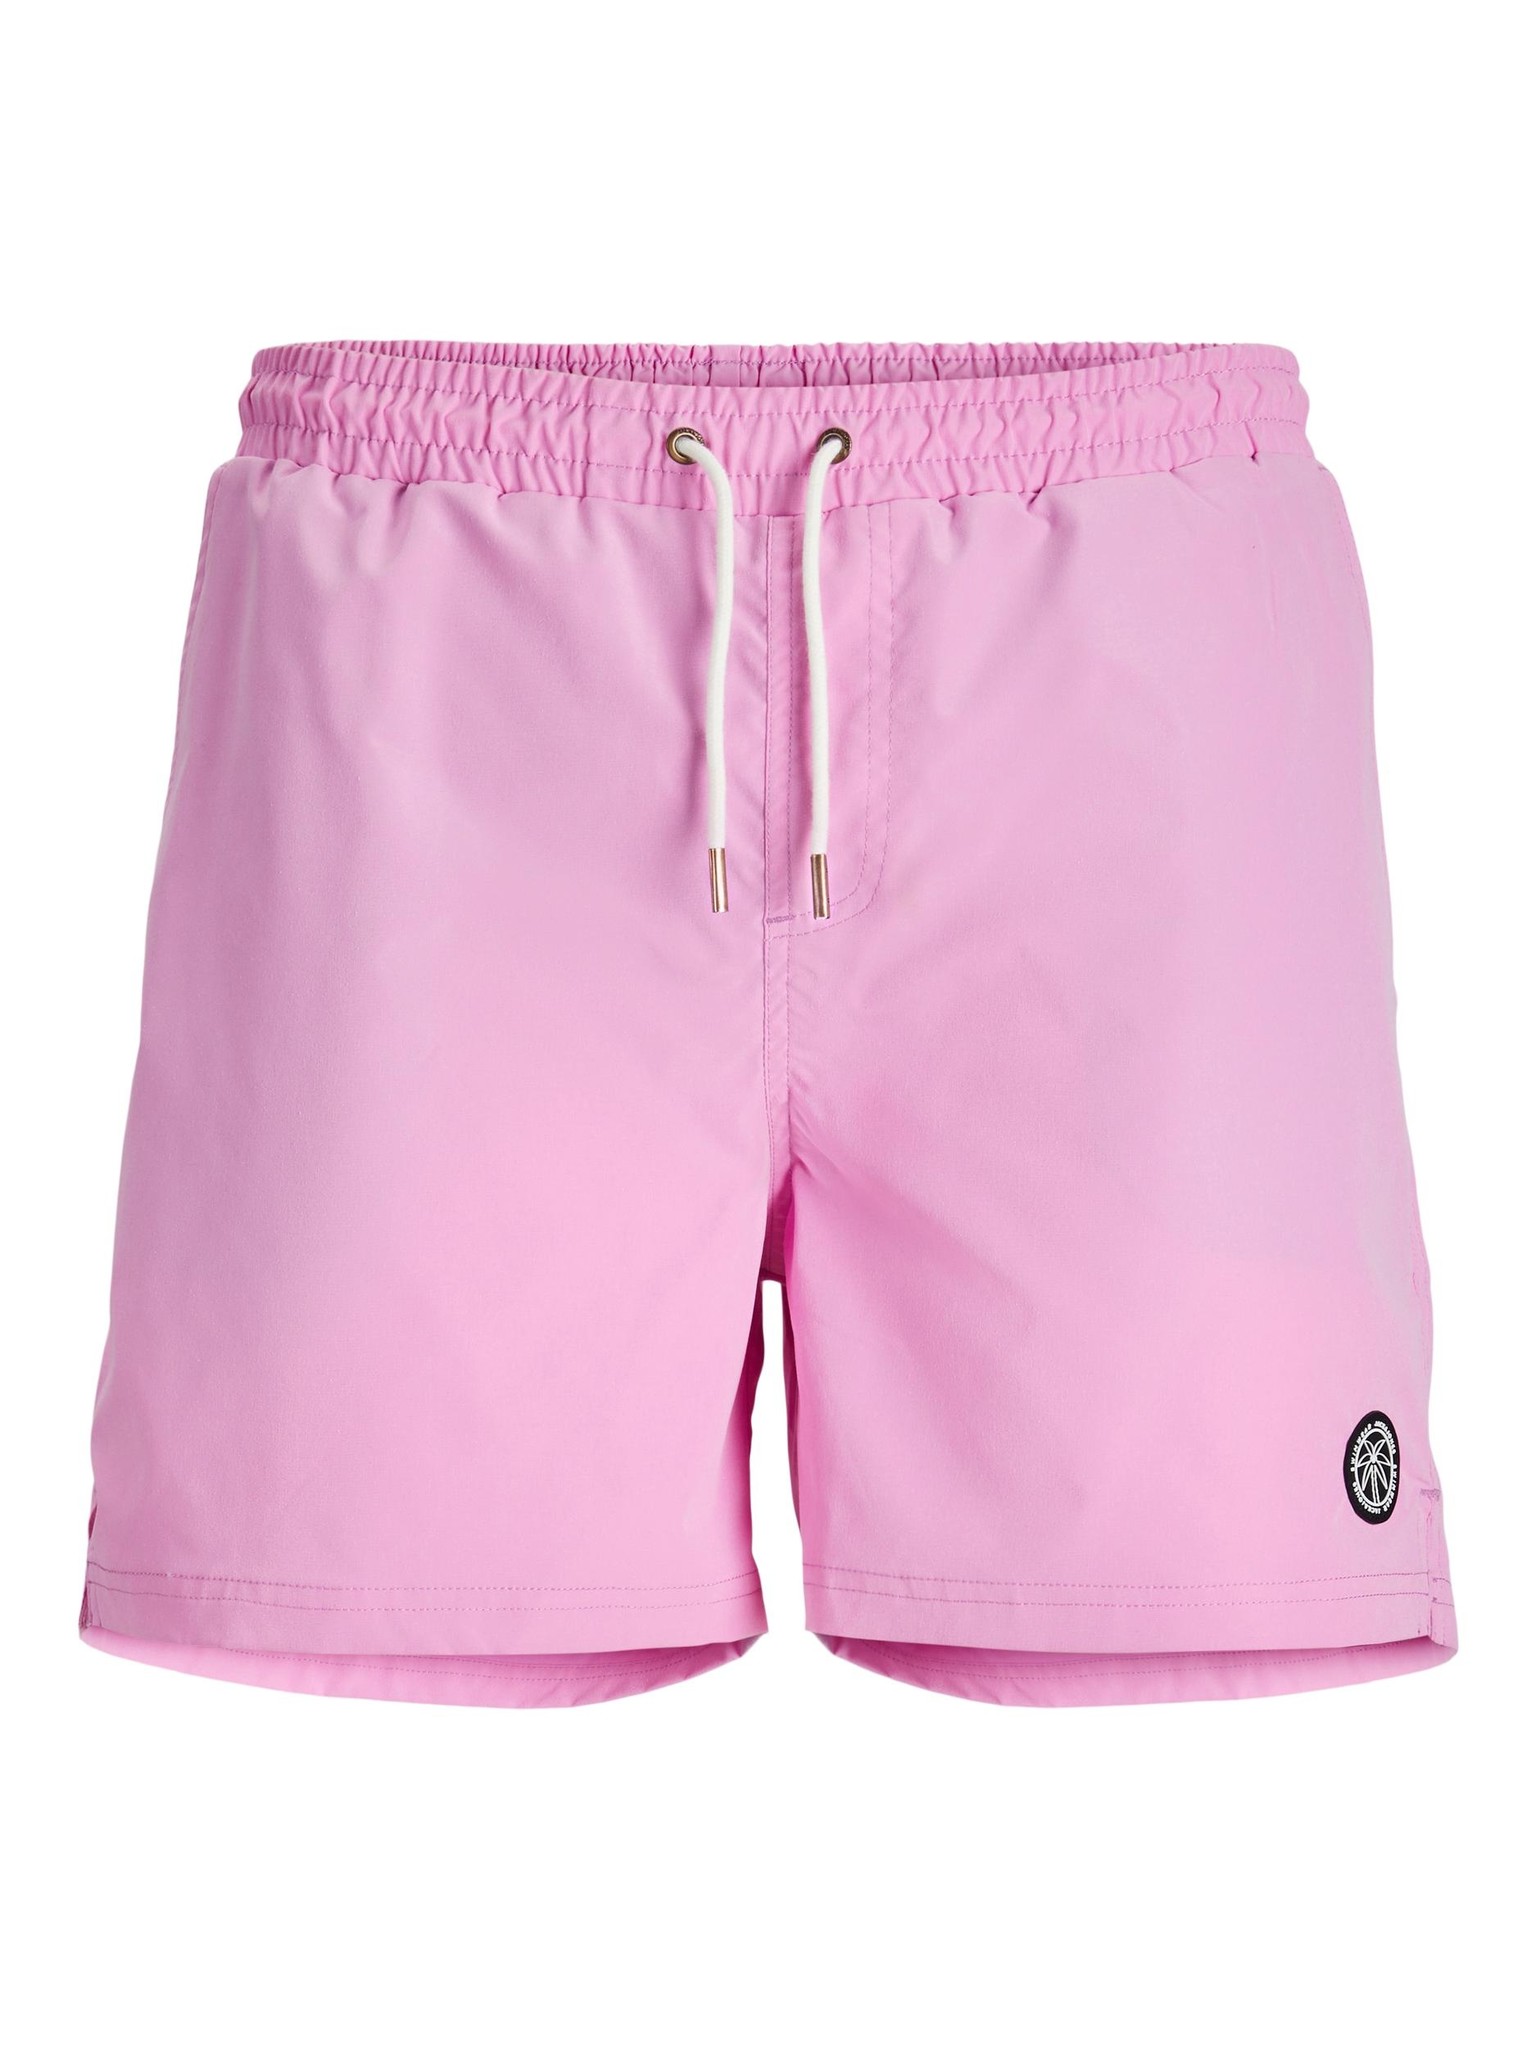 Jack & Jones Swimming Shorts Men JPSTMALTA Magic Pink | Underwear District